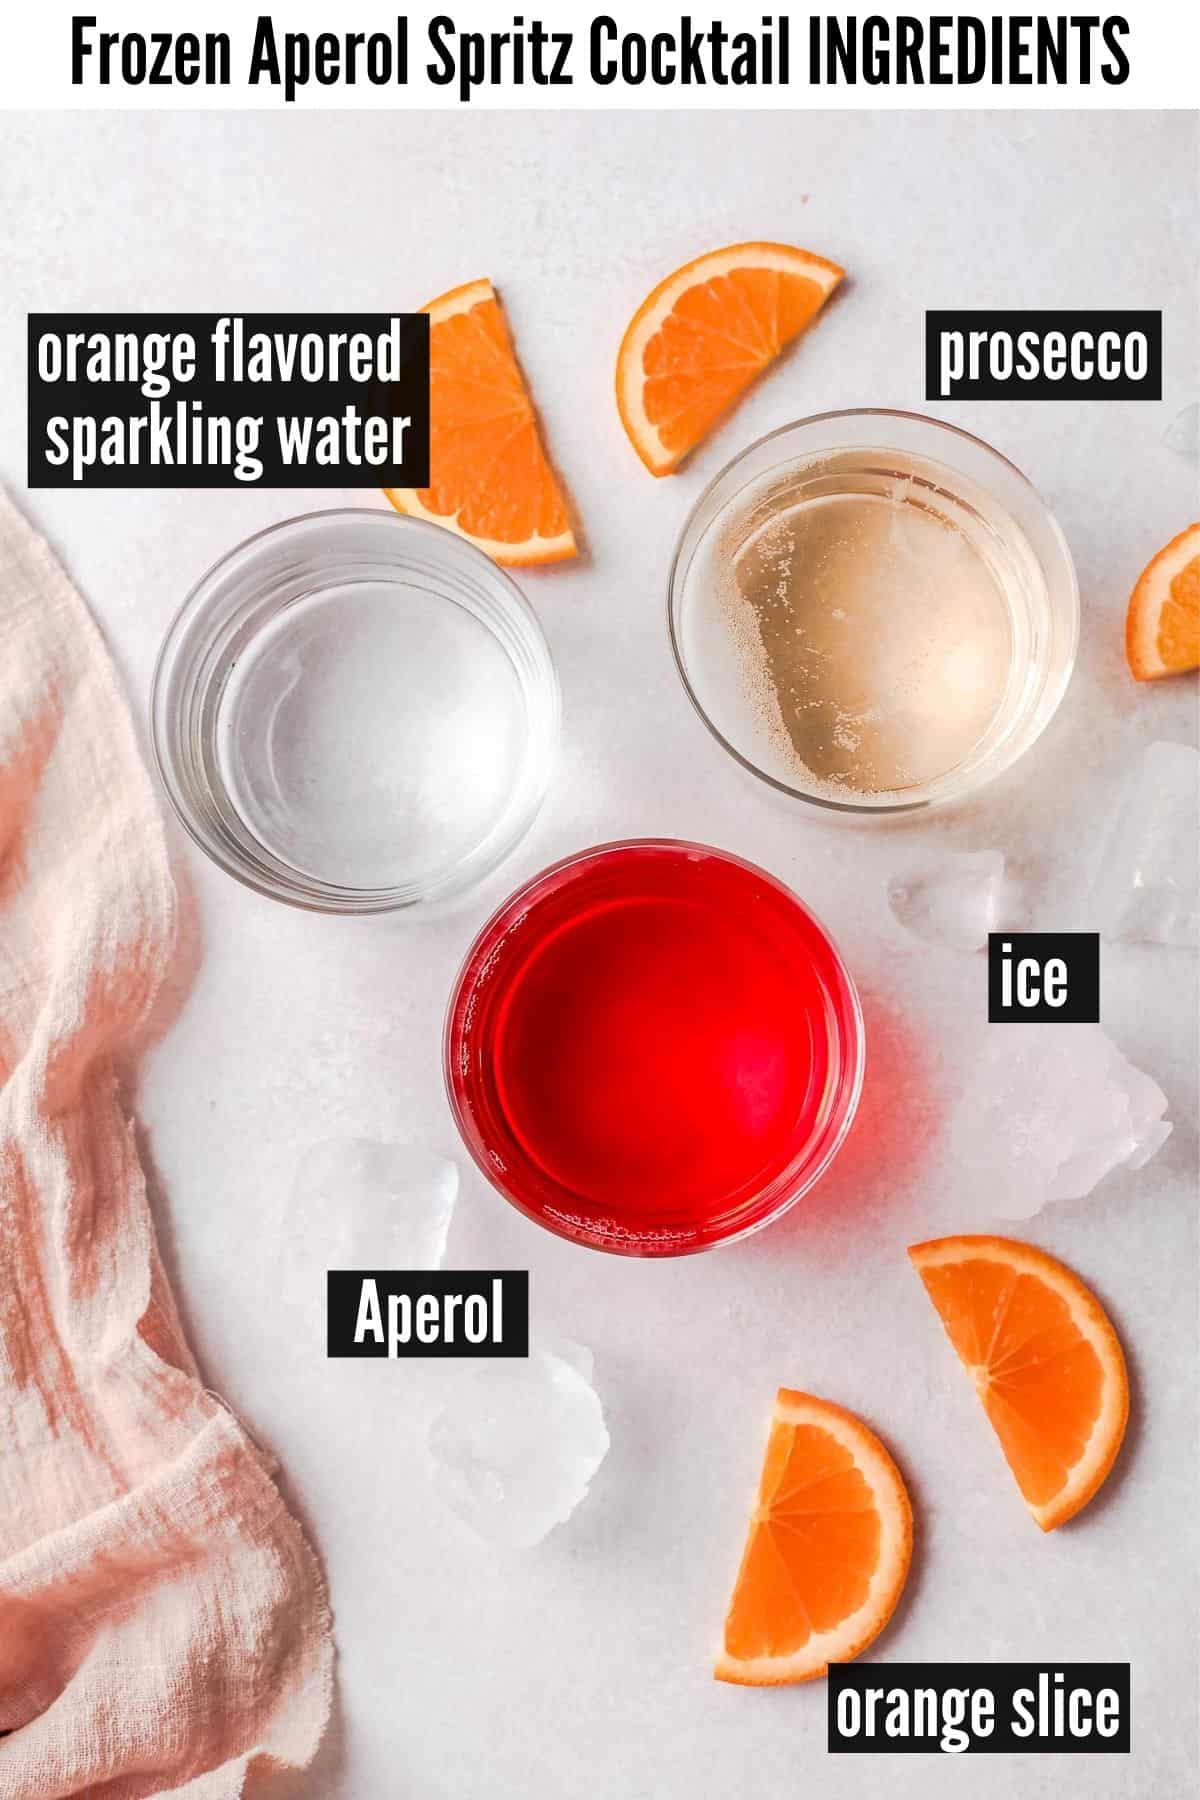 frozen aperol spritz labelled ingredients 